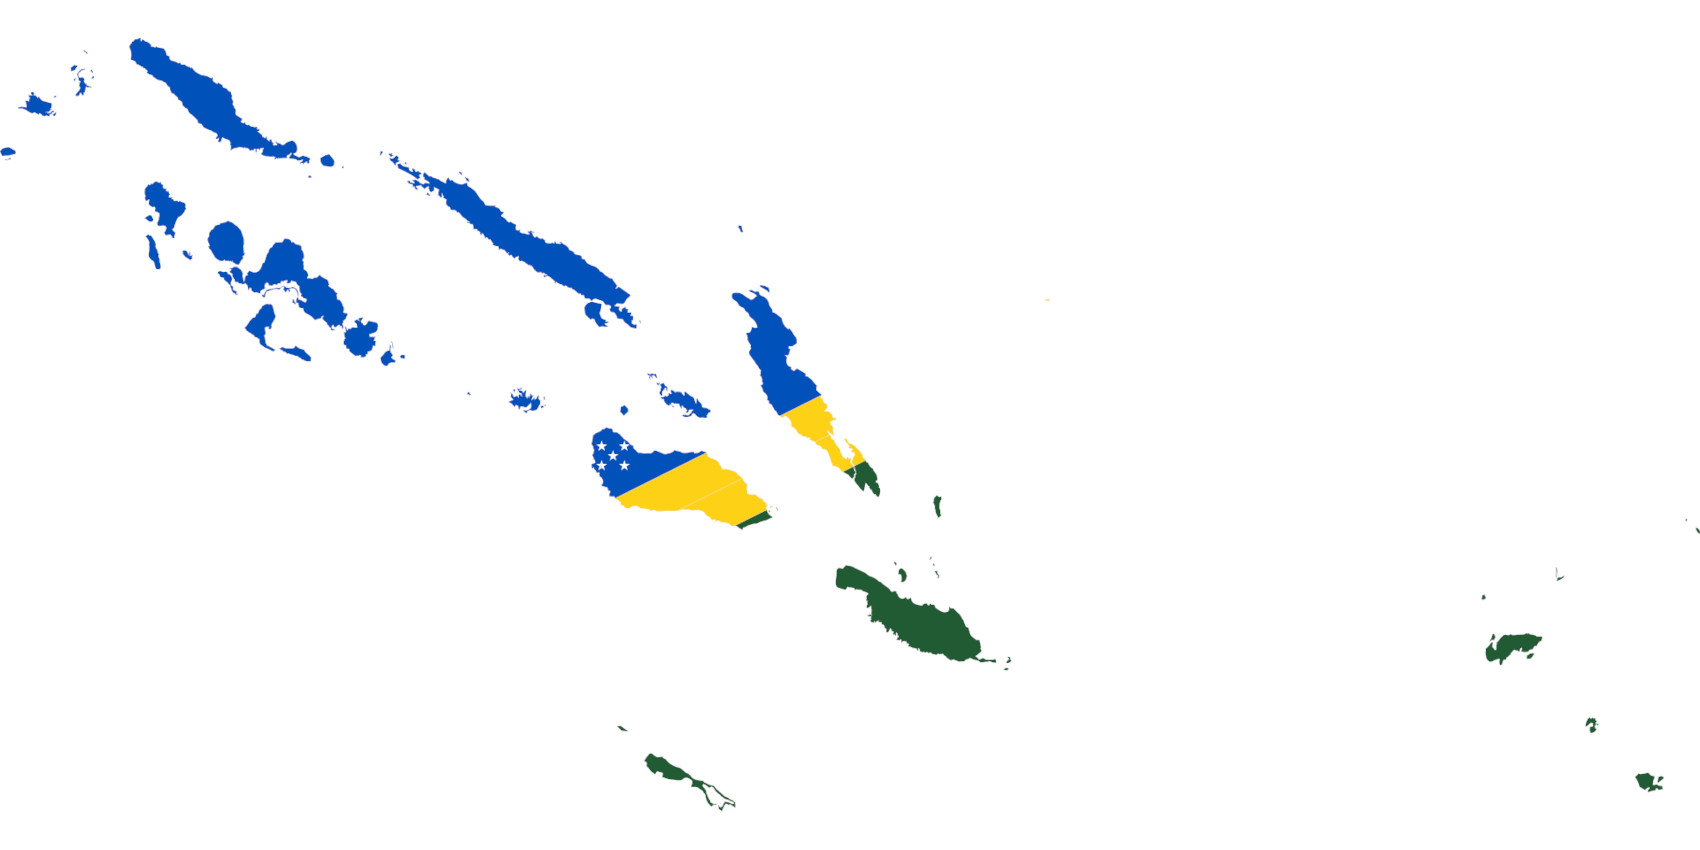 Solomon Islands - Image by Gordon Johnson